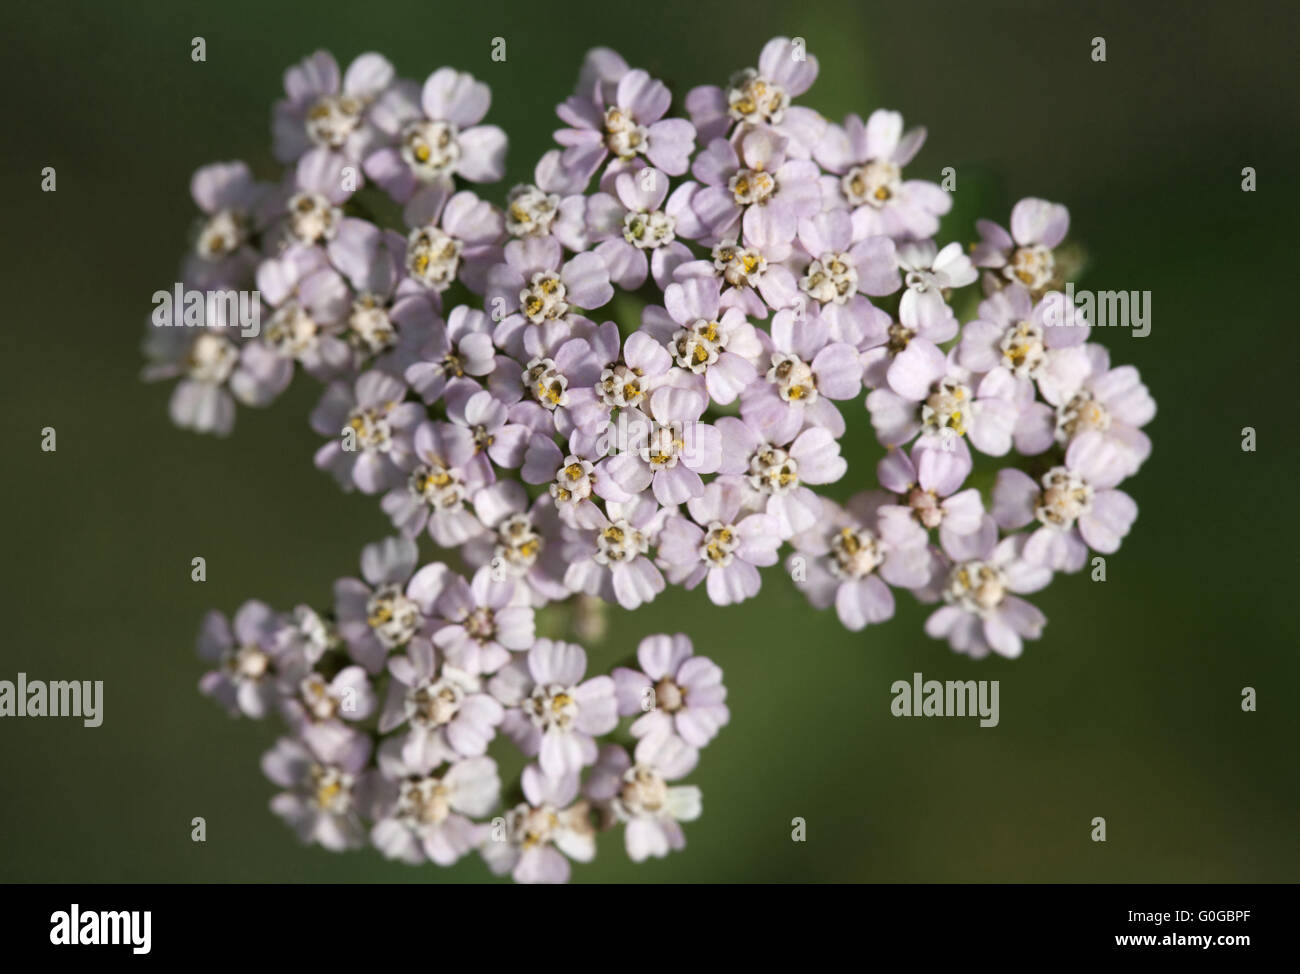 Saxifrage flowers close-up Stock Photo